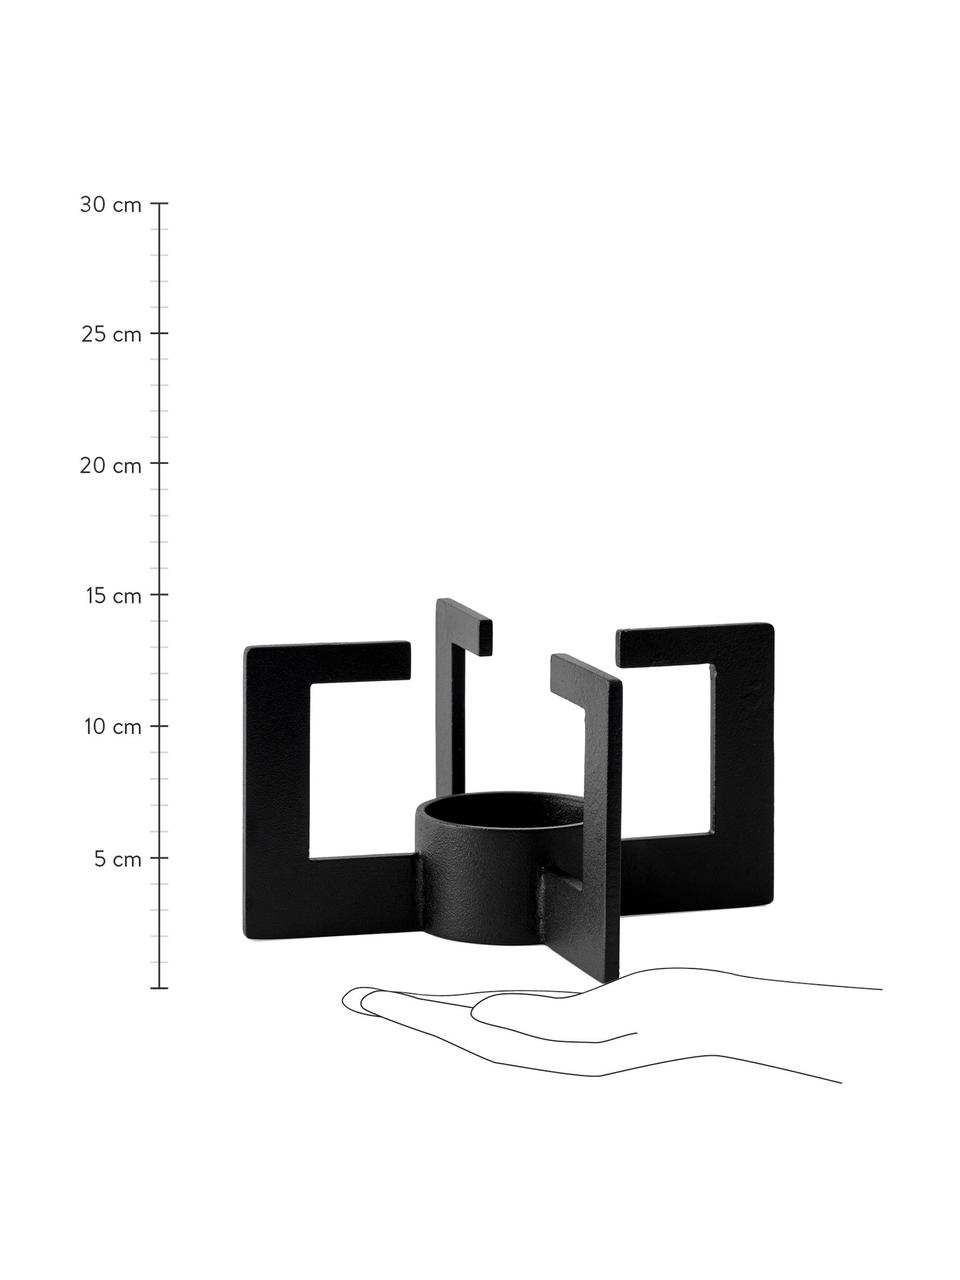 Designový ohřívač Warm-Up, Kov s práškovým nástřikem, guma, Černá, Ø 8 cm, V 15 cm